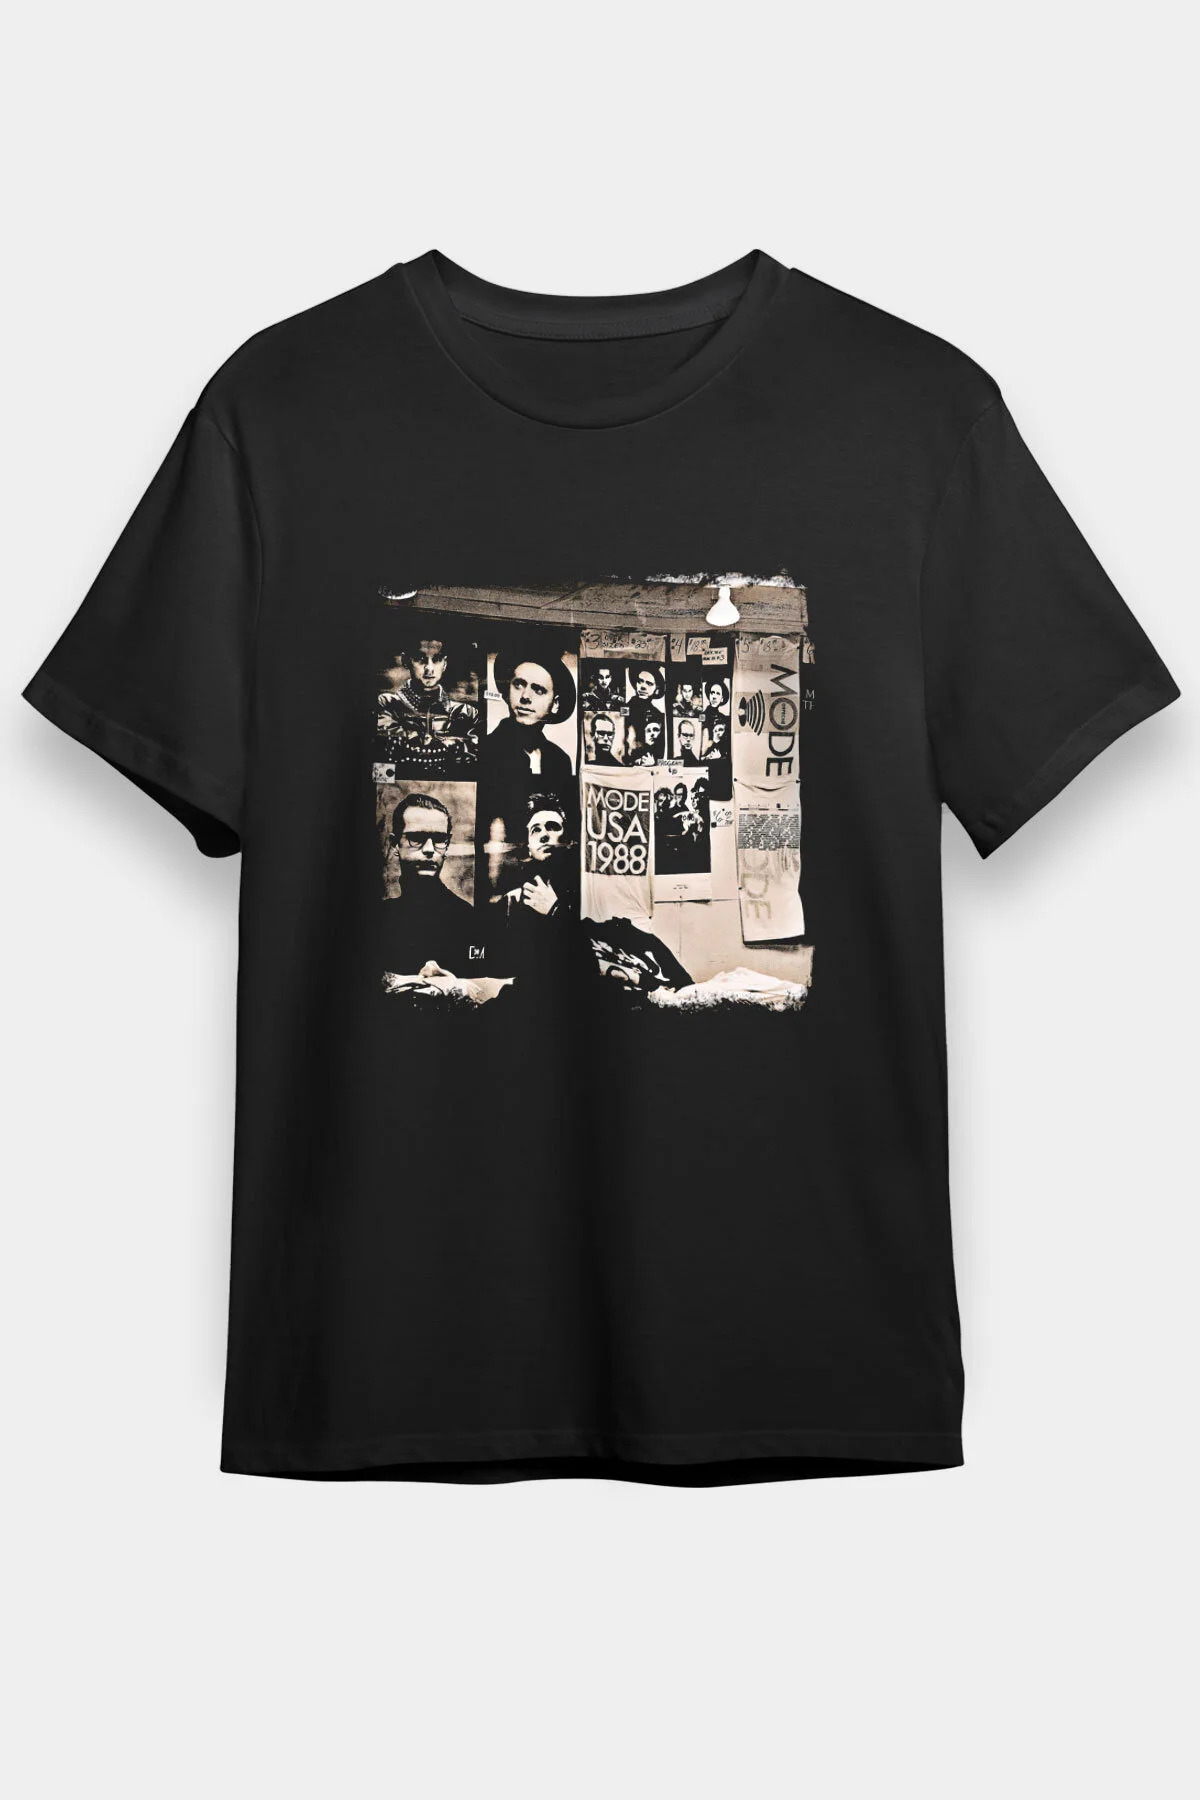 Depeche Mode T shirt , Music Band ,Unisex Tshirt 19